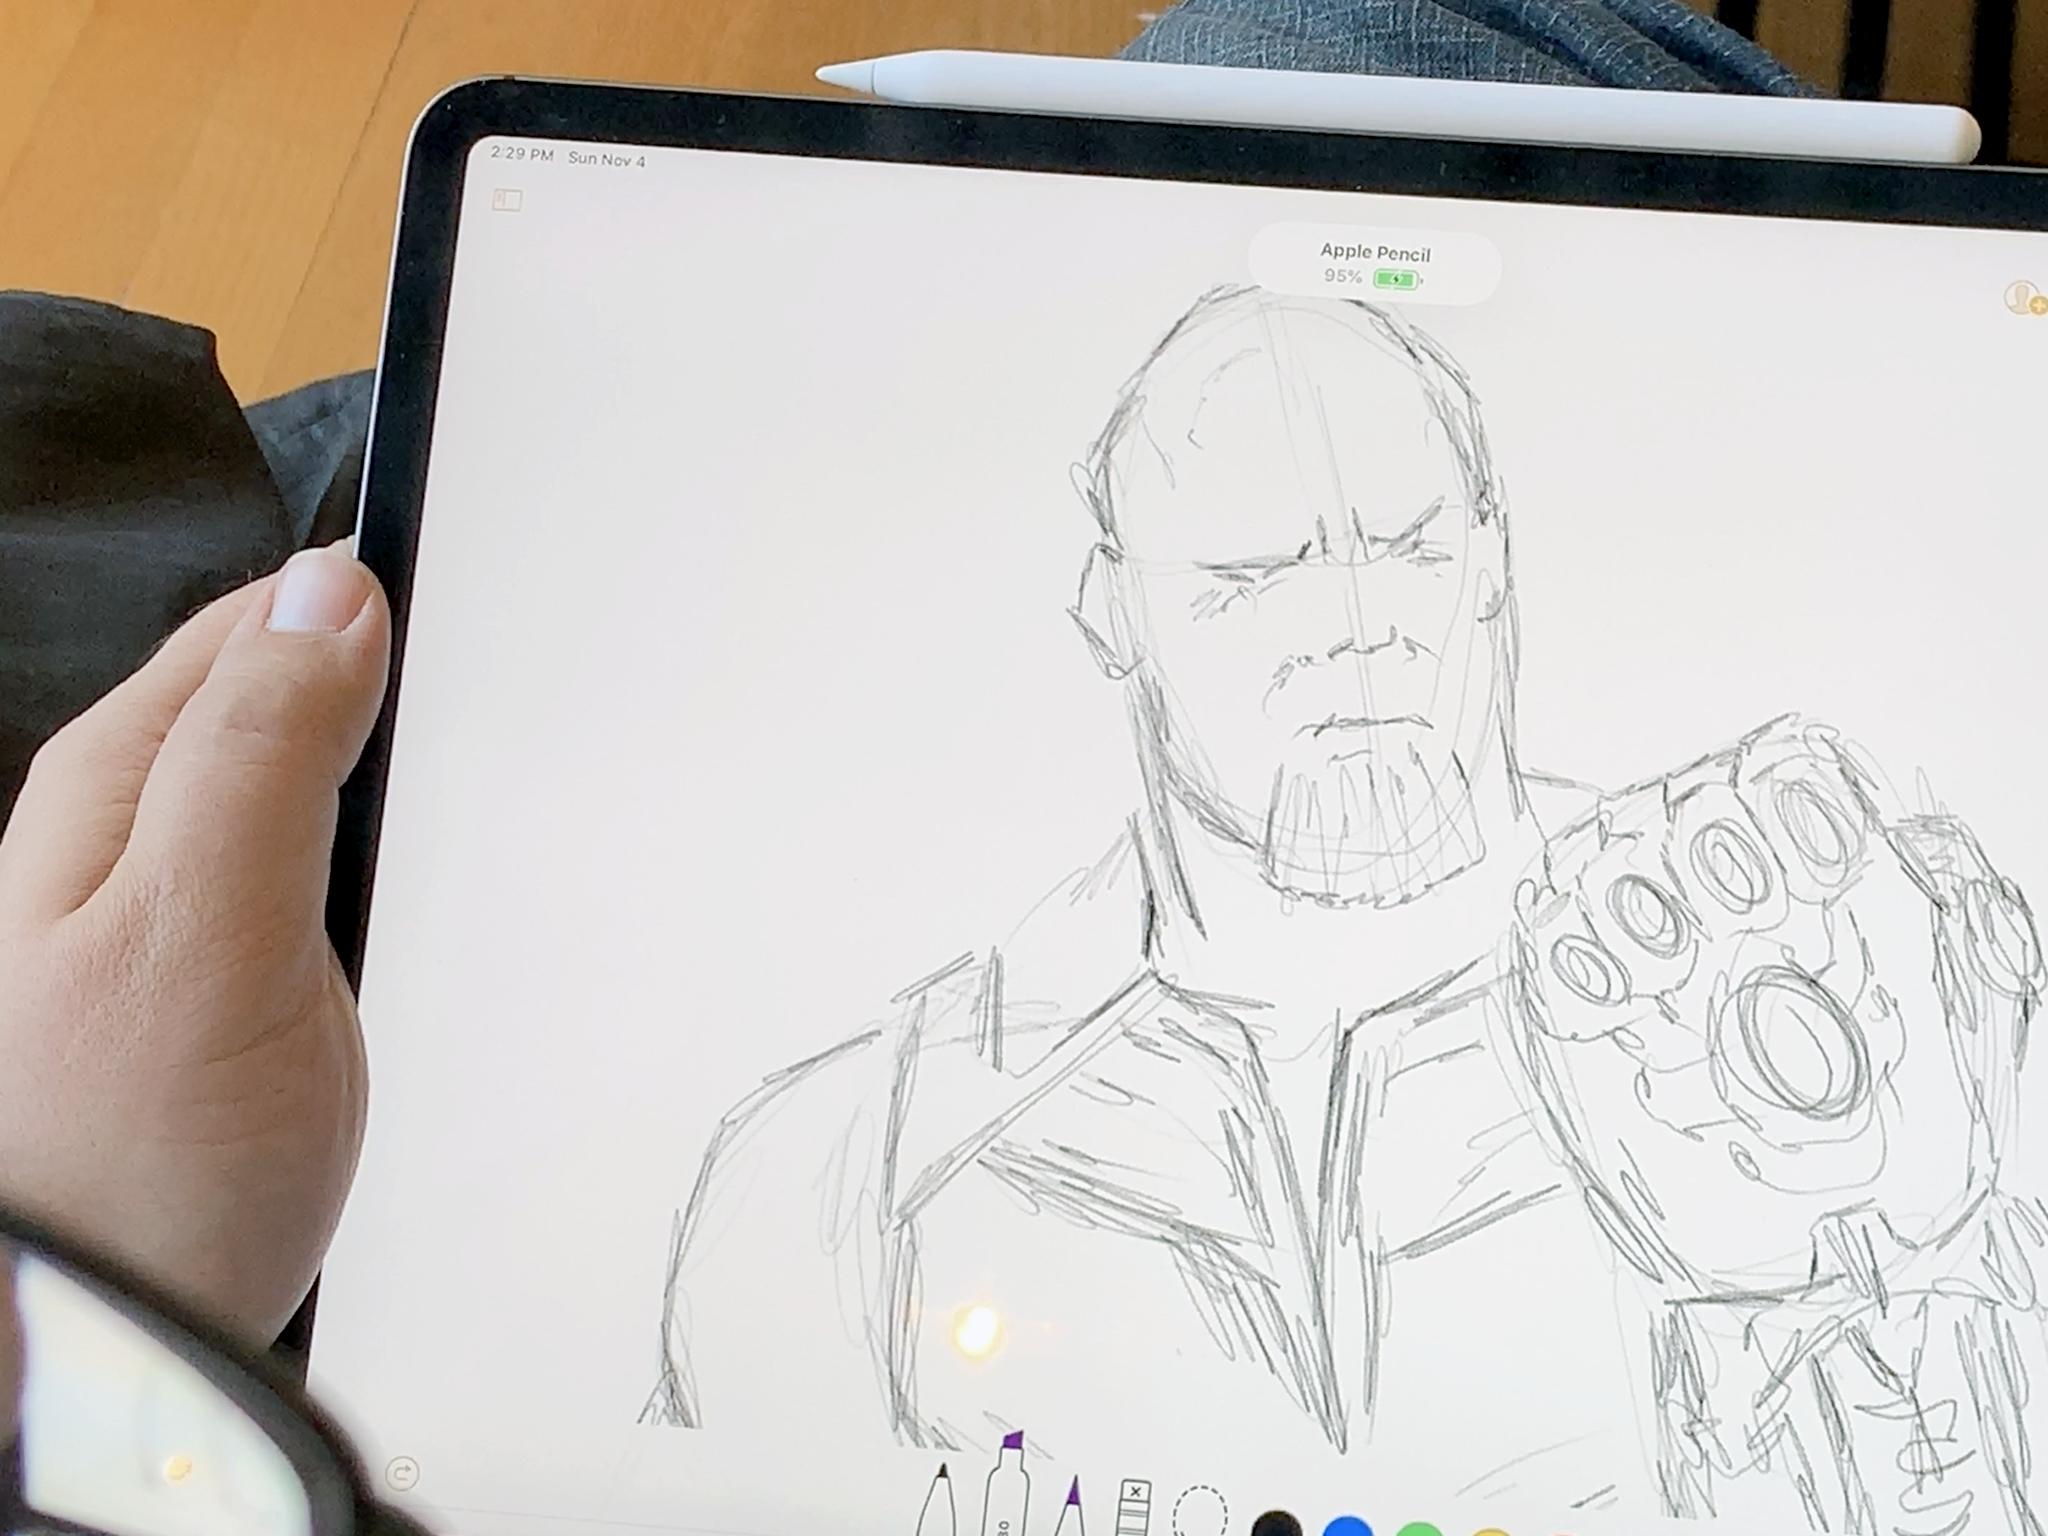 iPad Pro sketch of Thanos